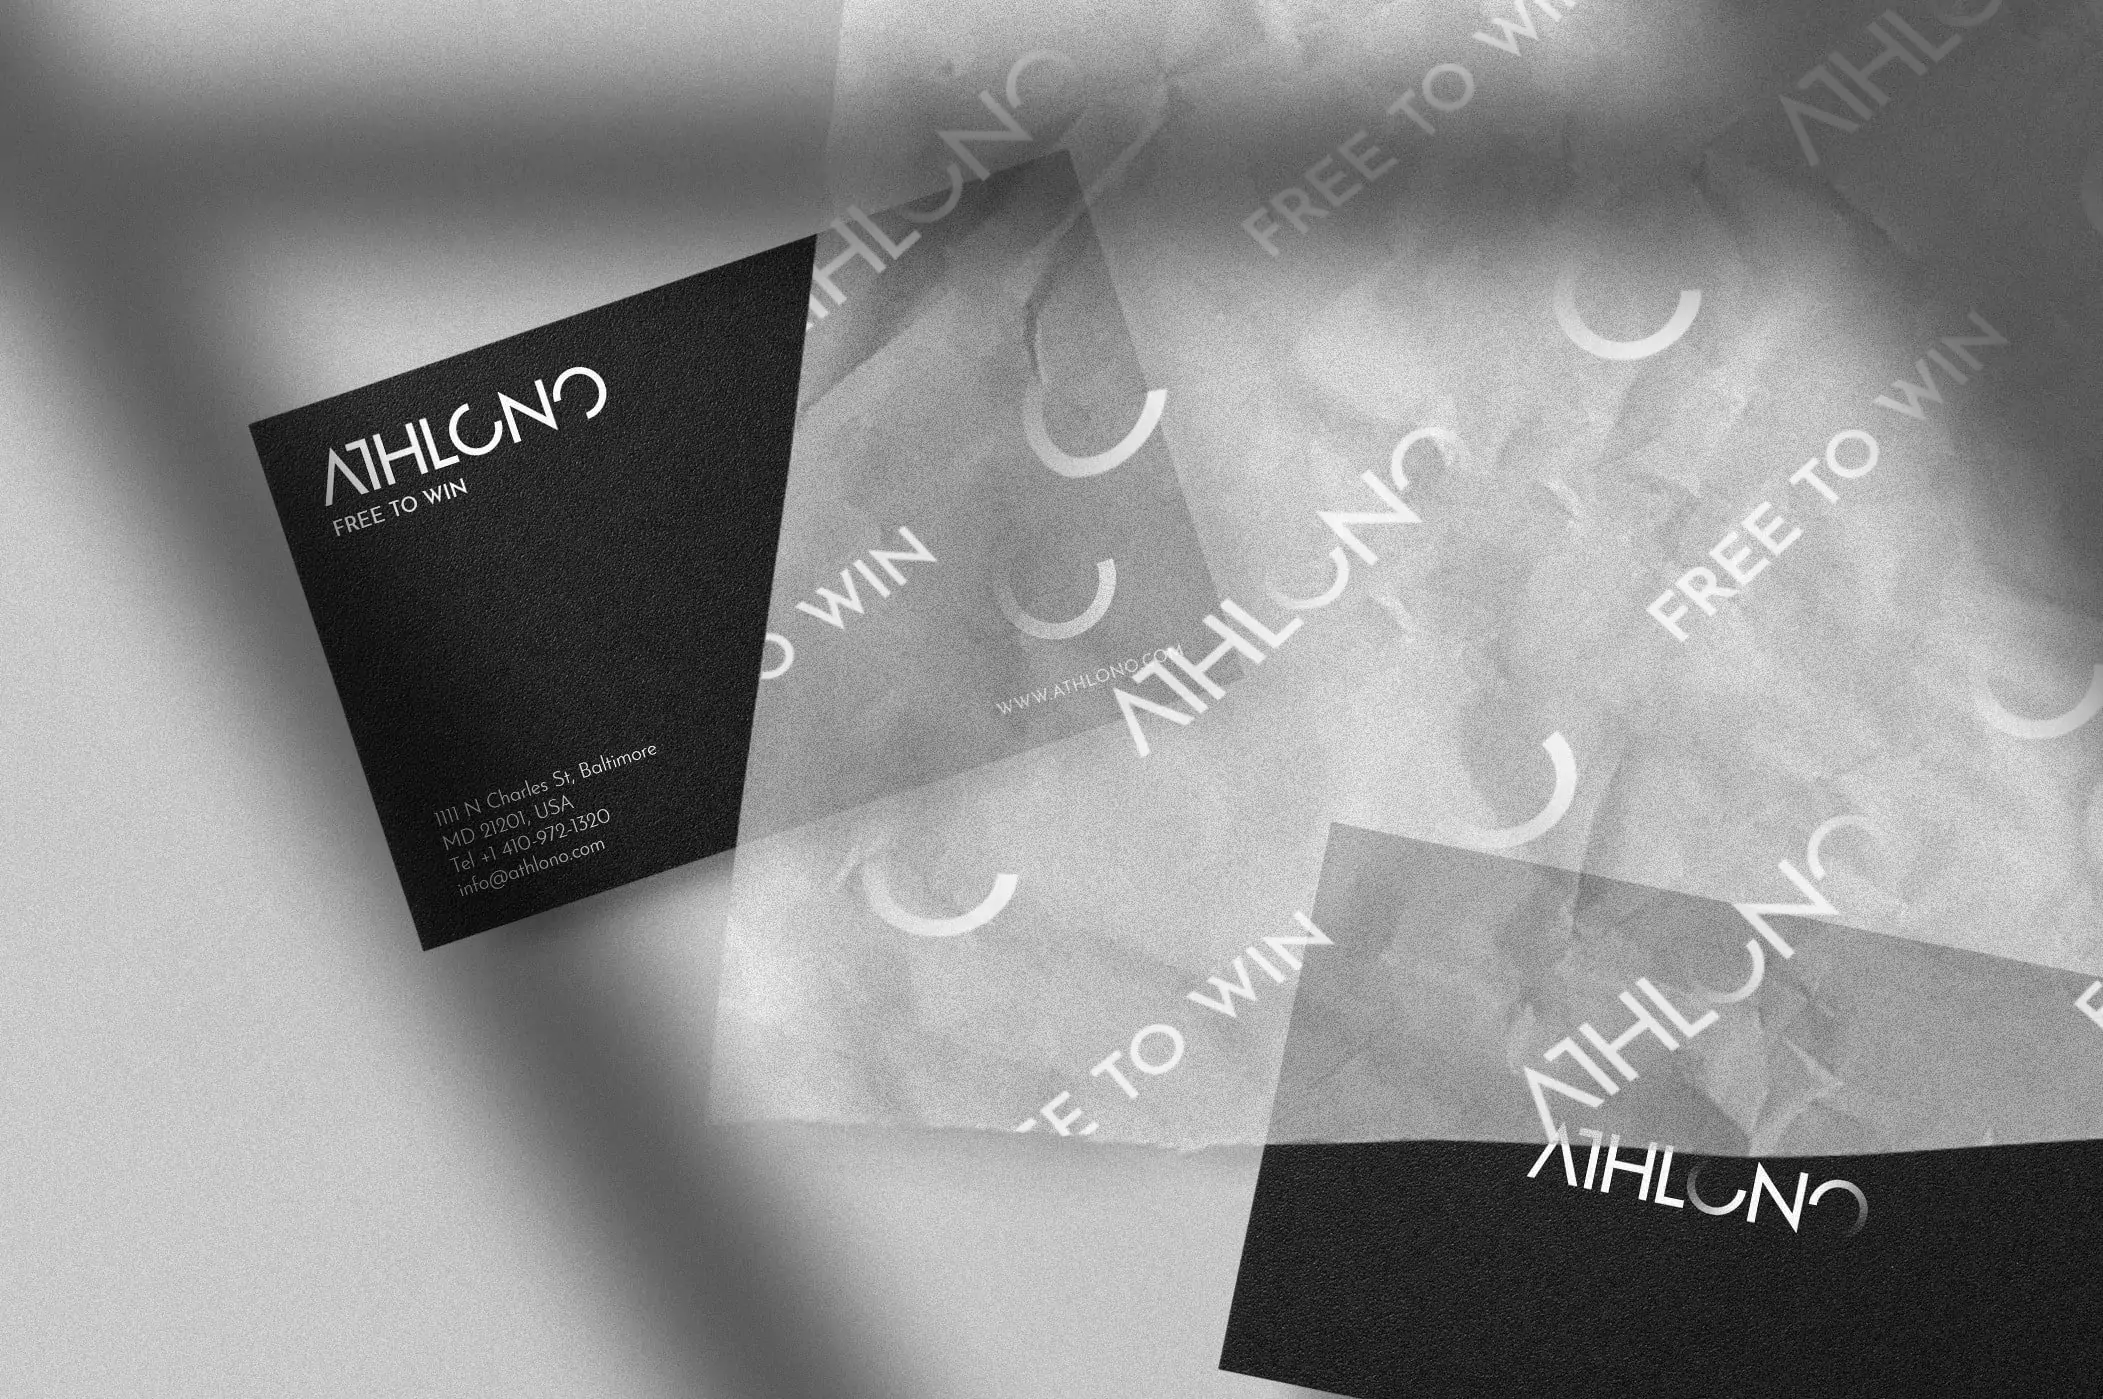 Athlono Brand Identity - Business Card Design